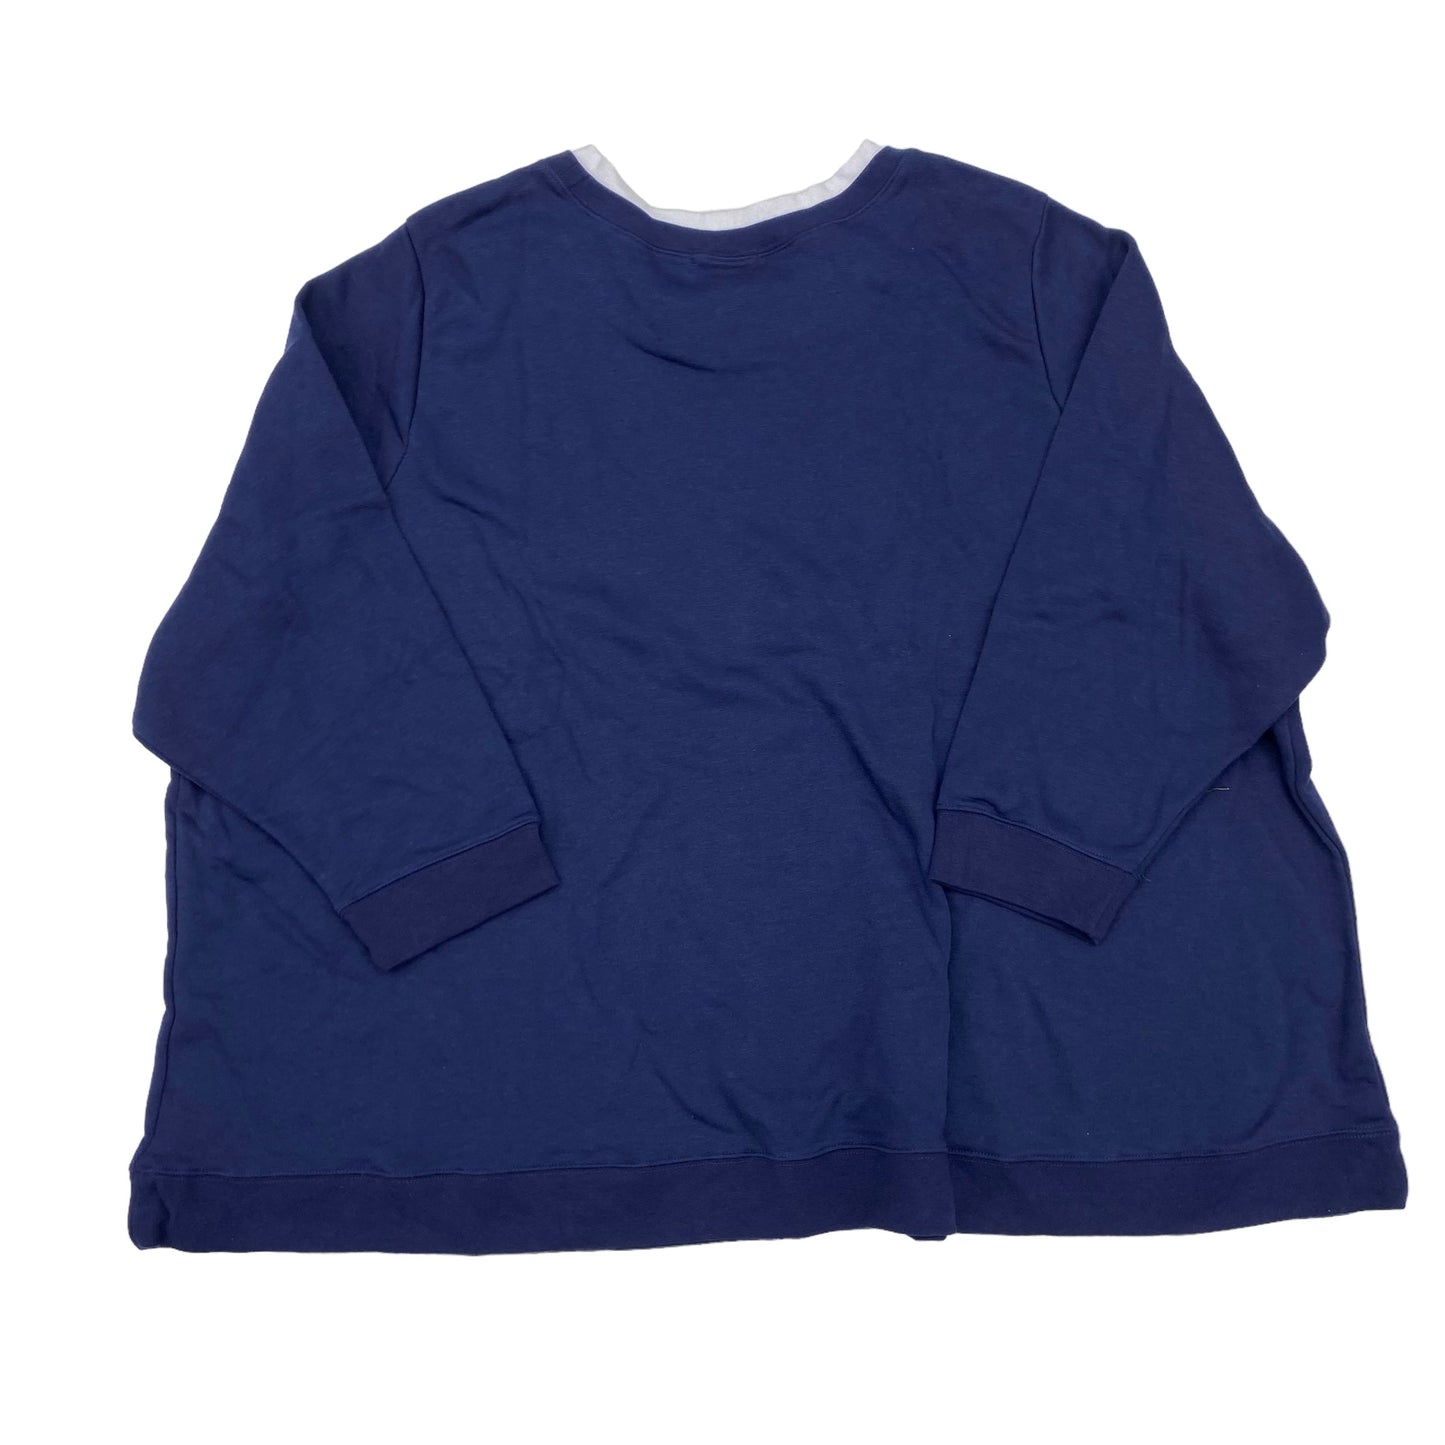 Sweatshirt Crewneck By Woman Within  Size: 4x